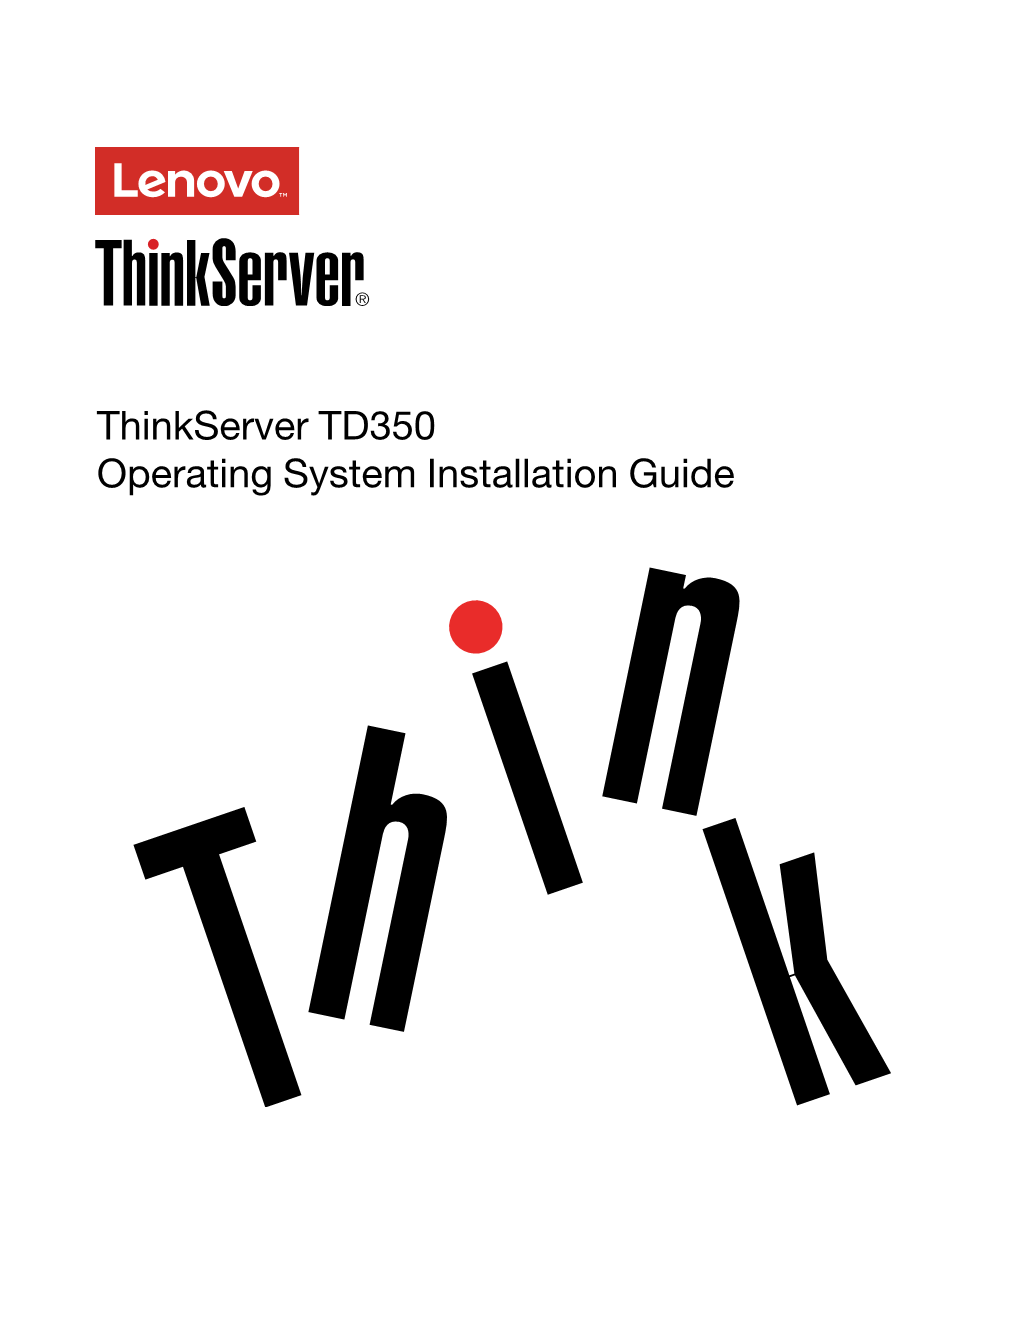 Thinkserver TD350 Operating System Installation Guide